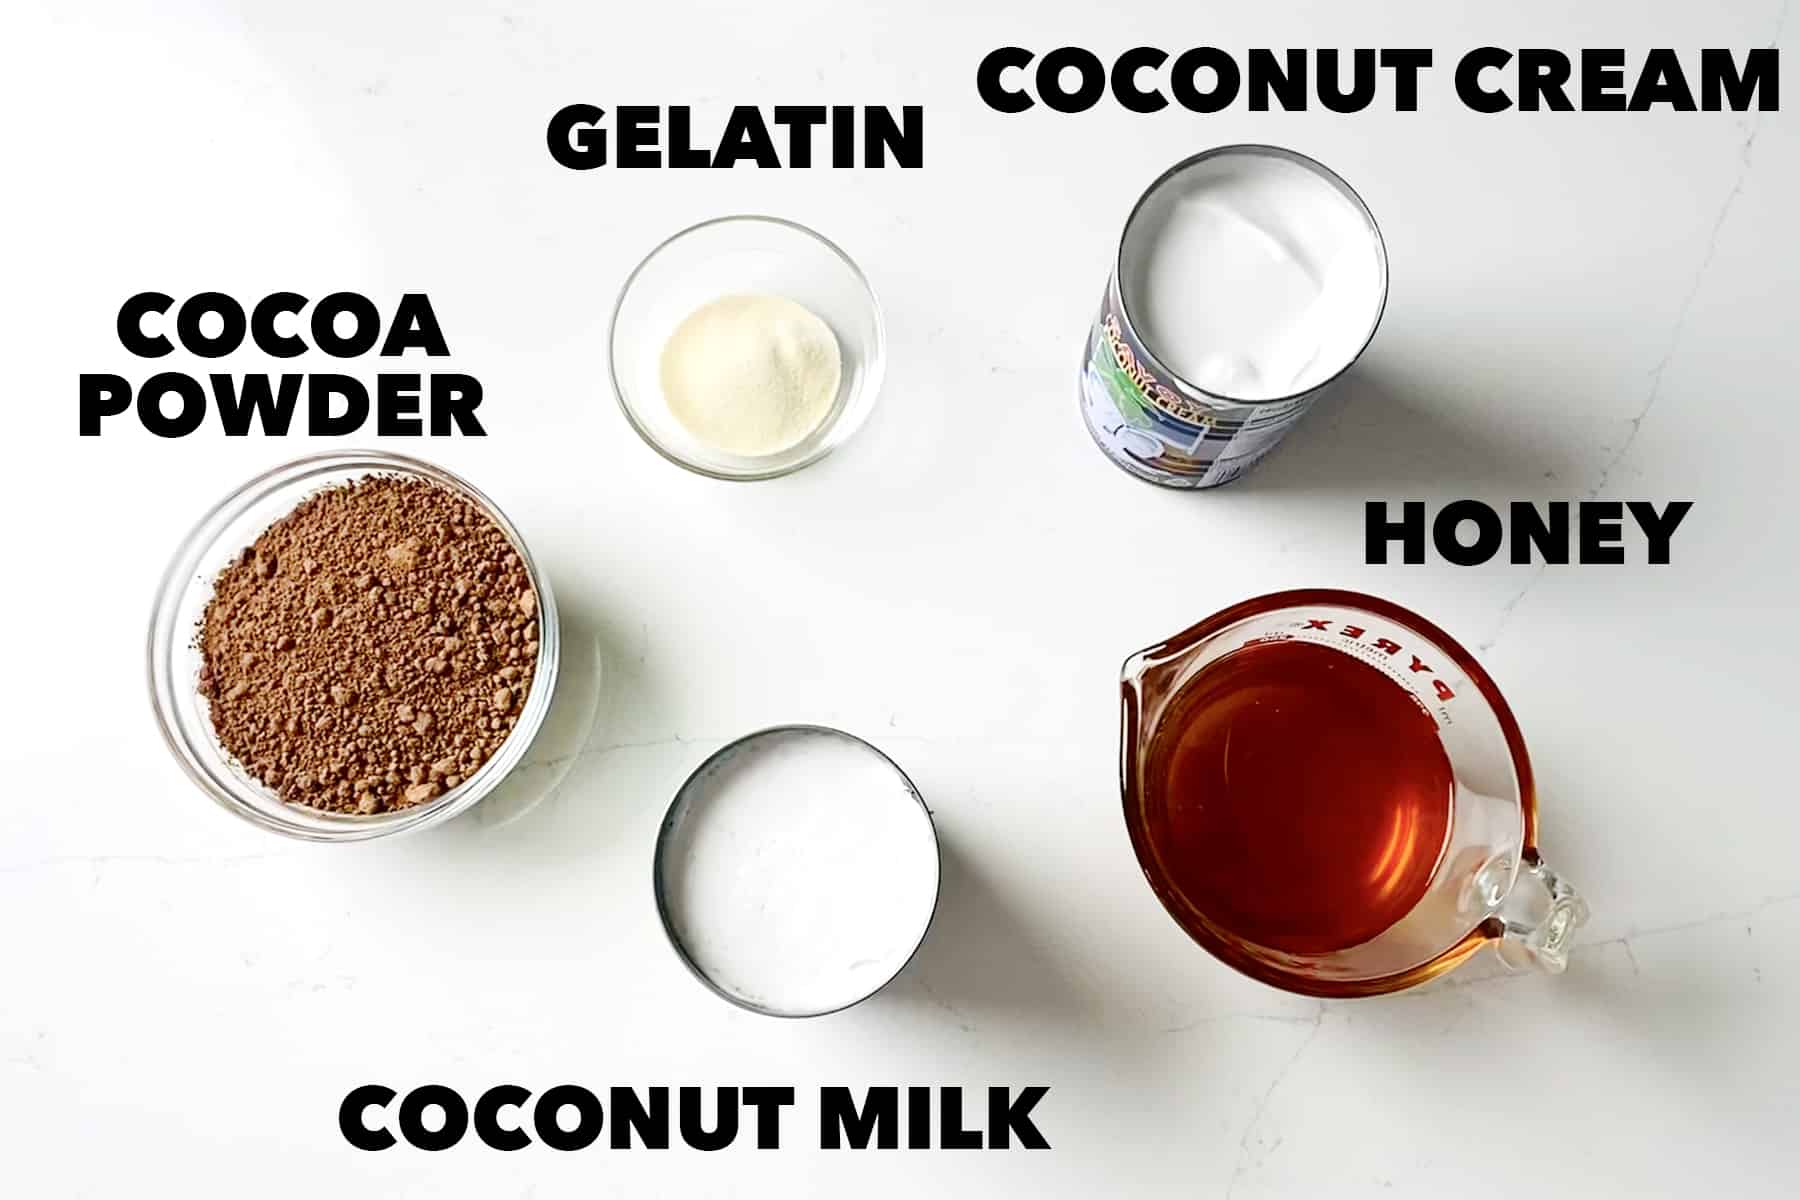 ingredients for Chocolate Panna Cotta: cocoa powder, coconut milk/cream, gelatin, honey.